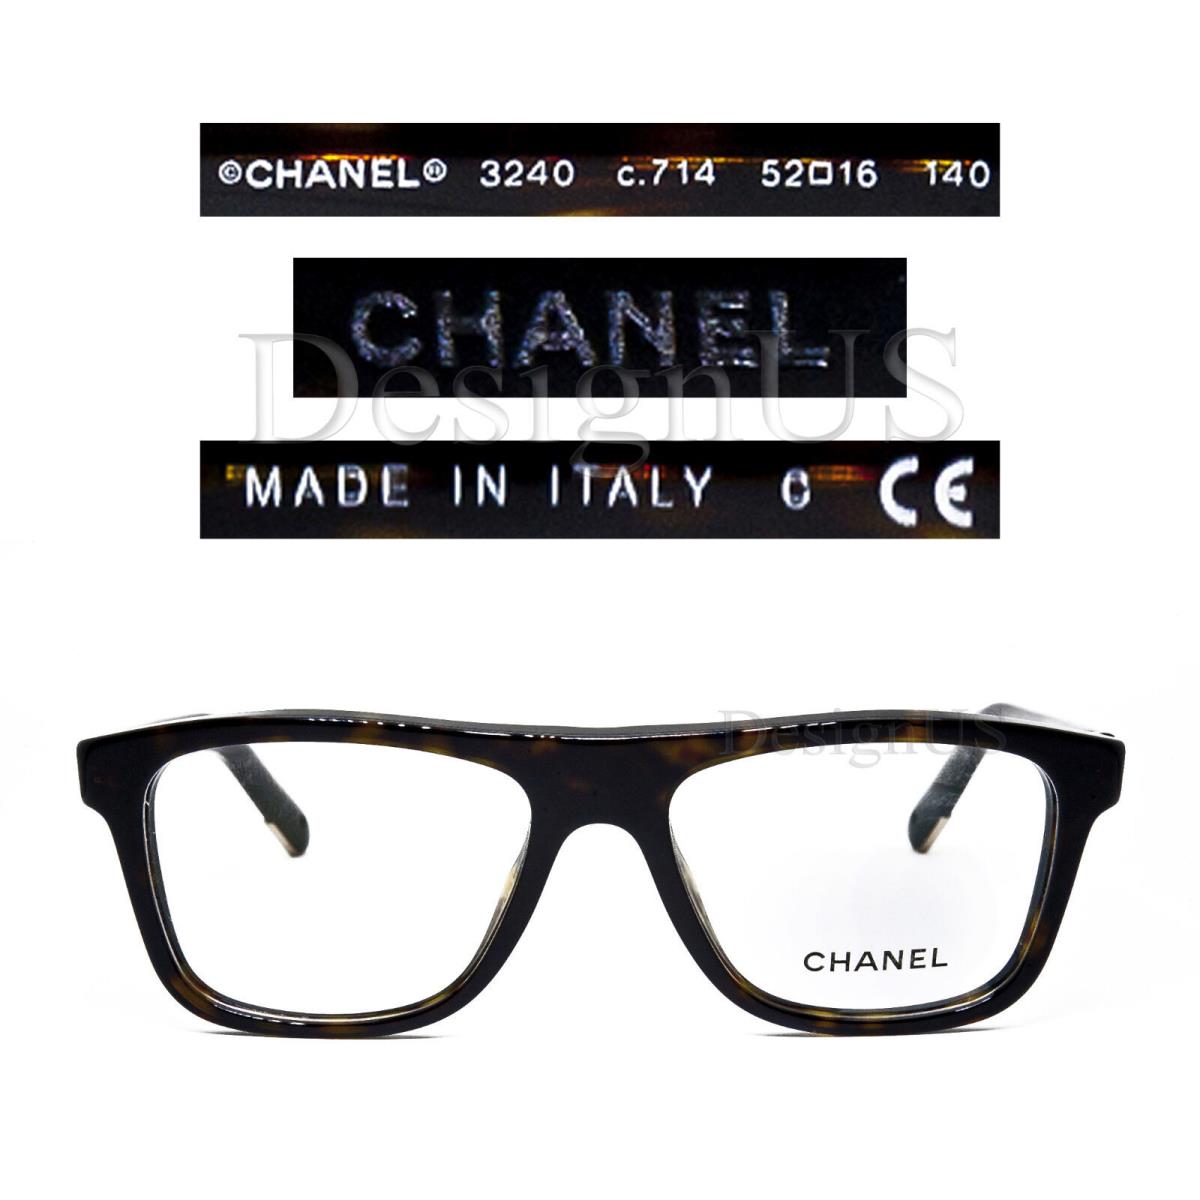 Chanel 3240 c.714 Dark Tortoise 52/16/140 Eyeglasses - Made in Italy